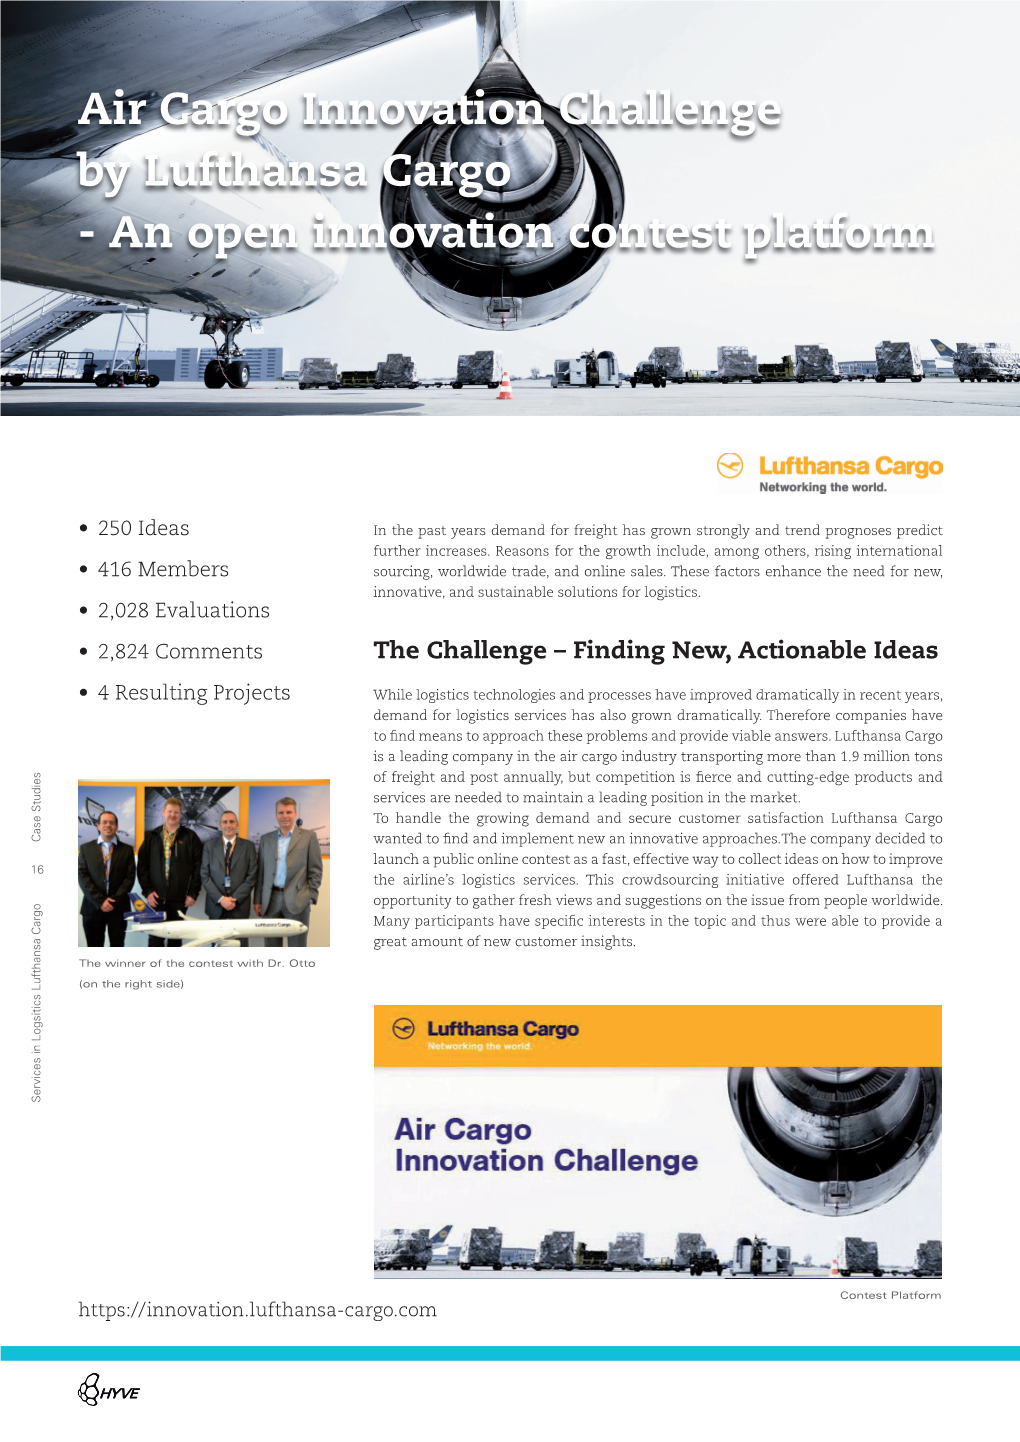 Air Cargo Innovation Challenge by Lufthansa Cargo